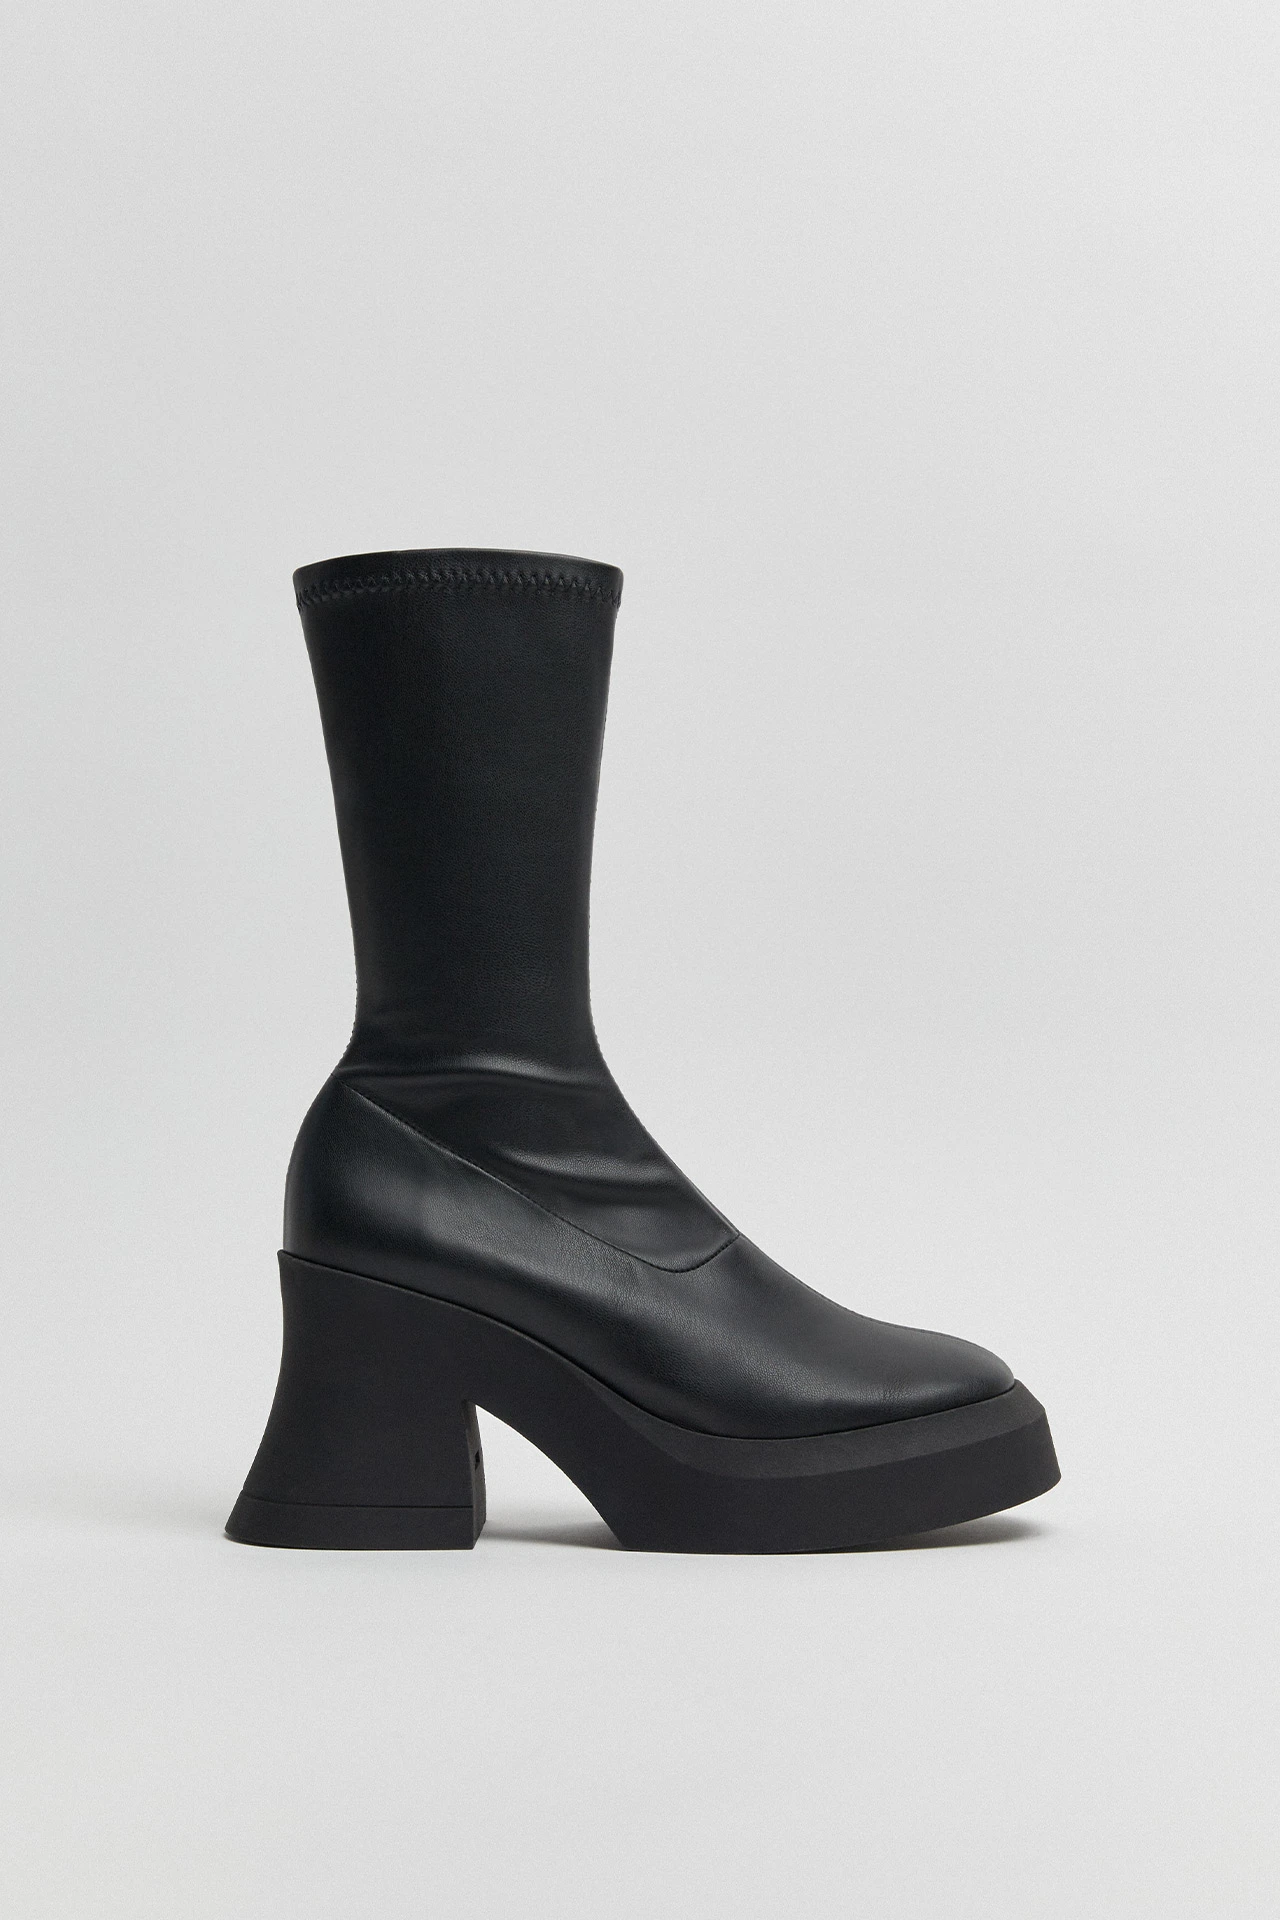 E8-aura-black-boots-01